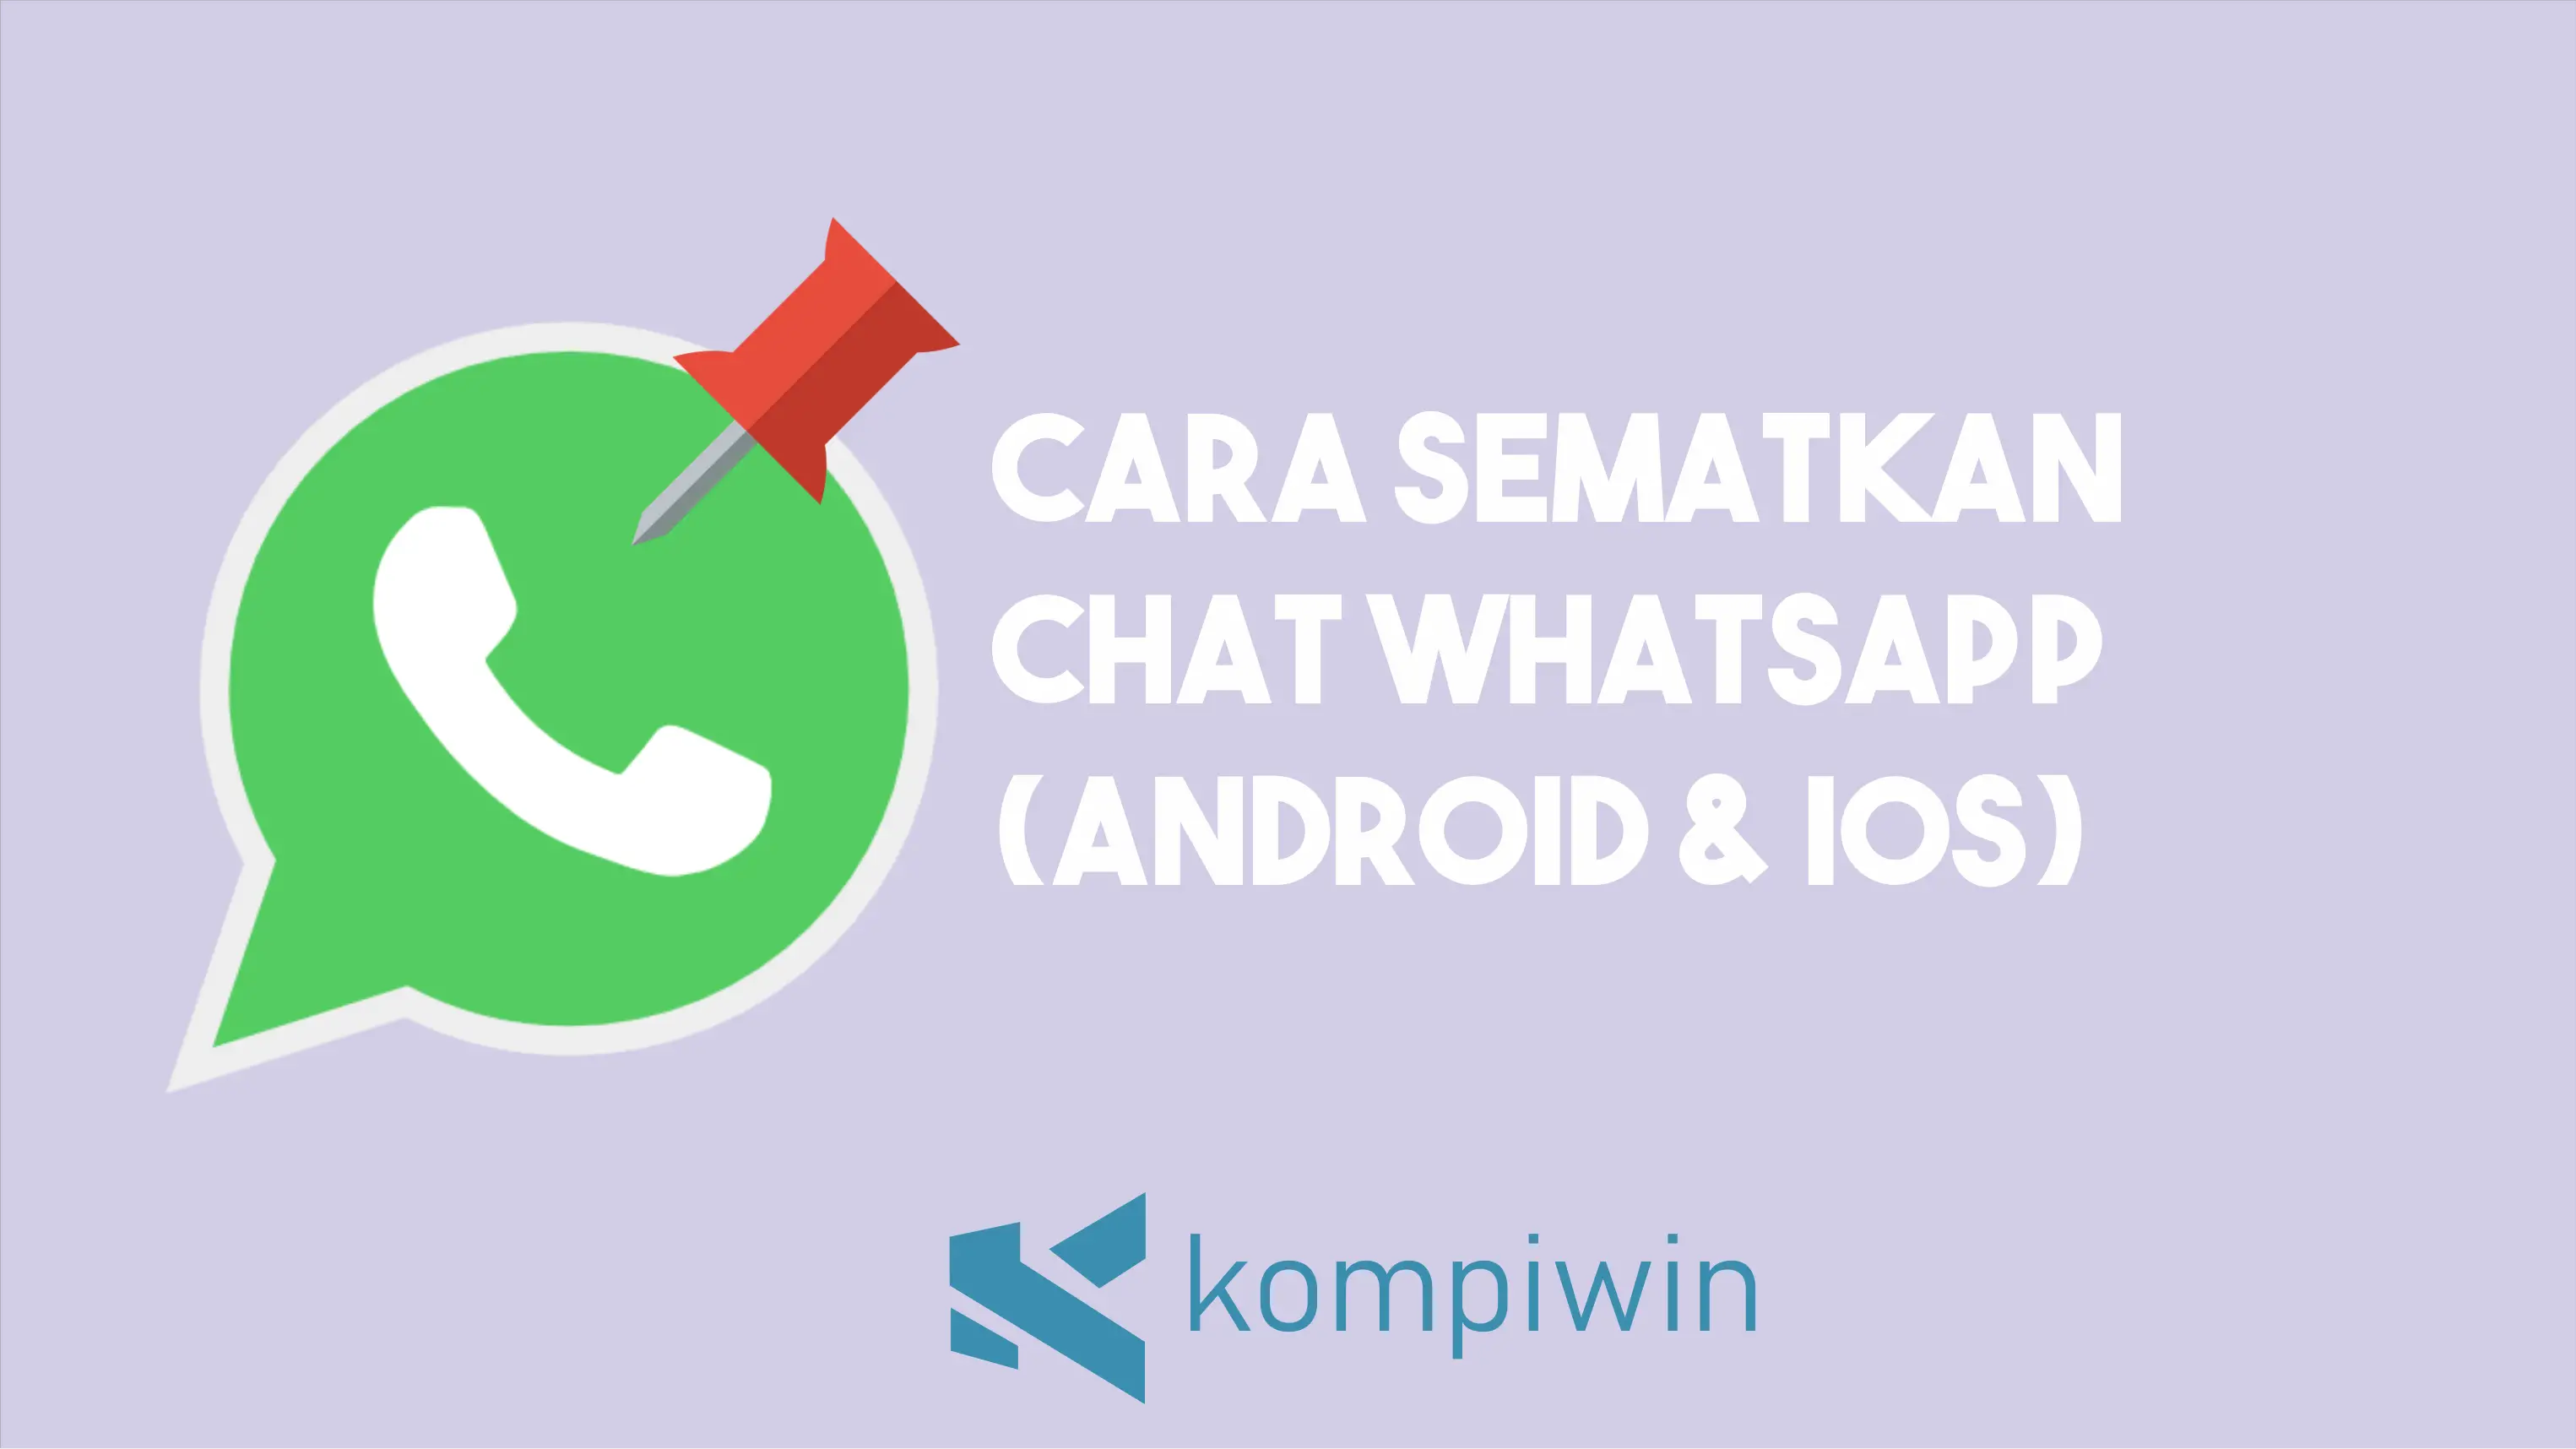 Cara Sematkan (Pin) Chat Whatsapp di Android dan iPhone [LENGKAP] 1